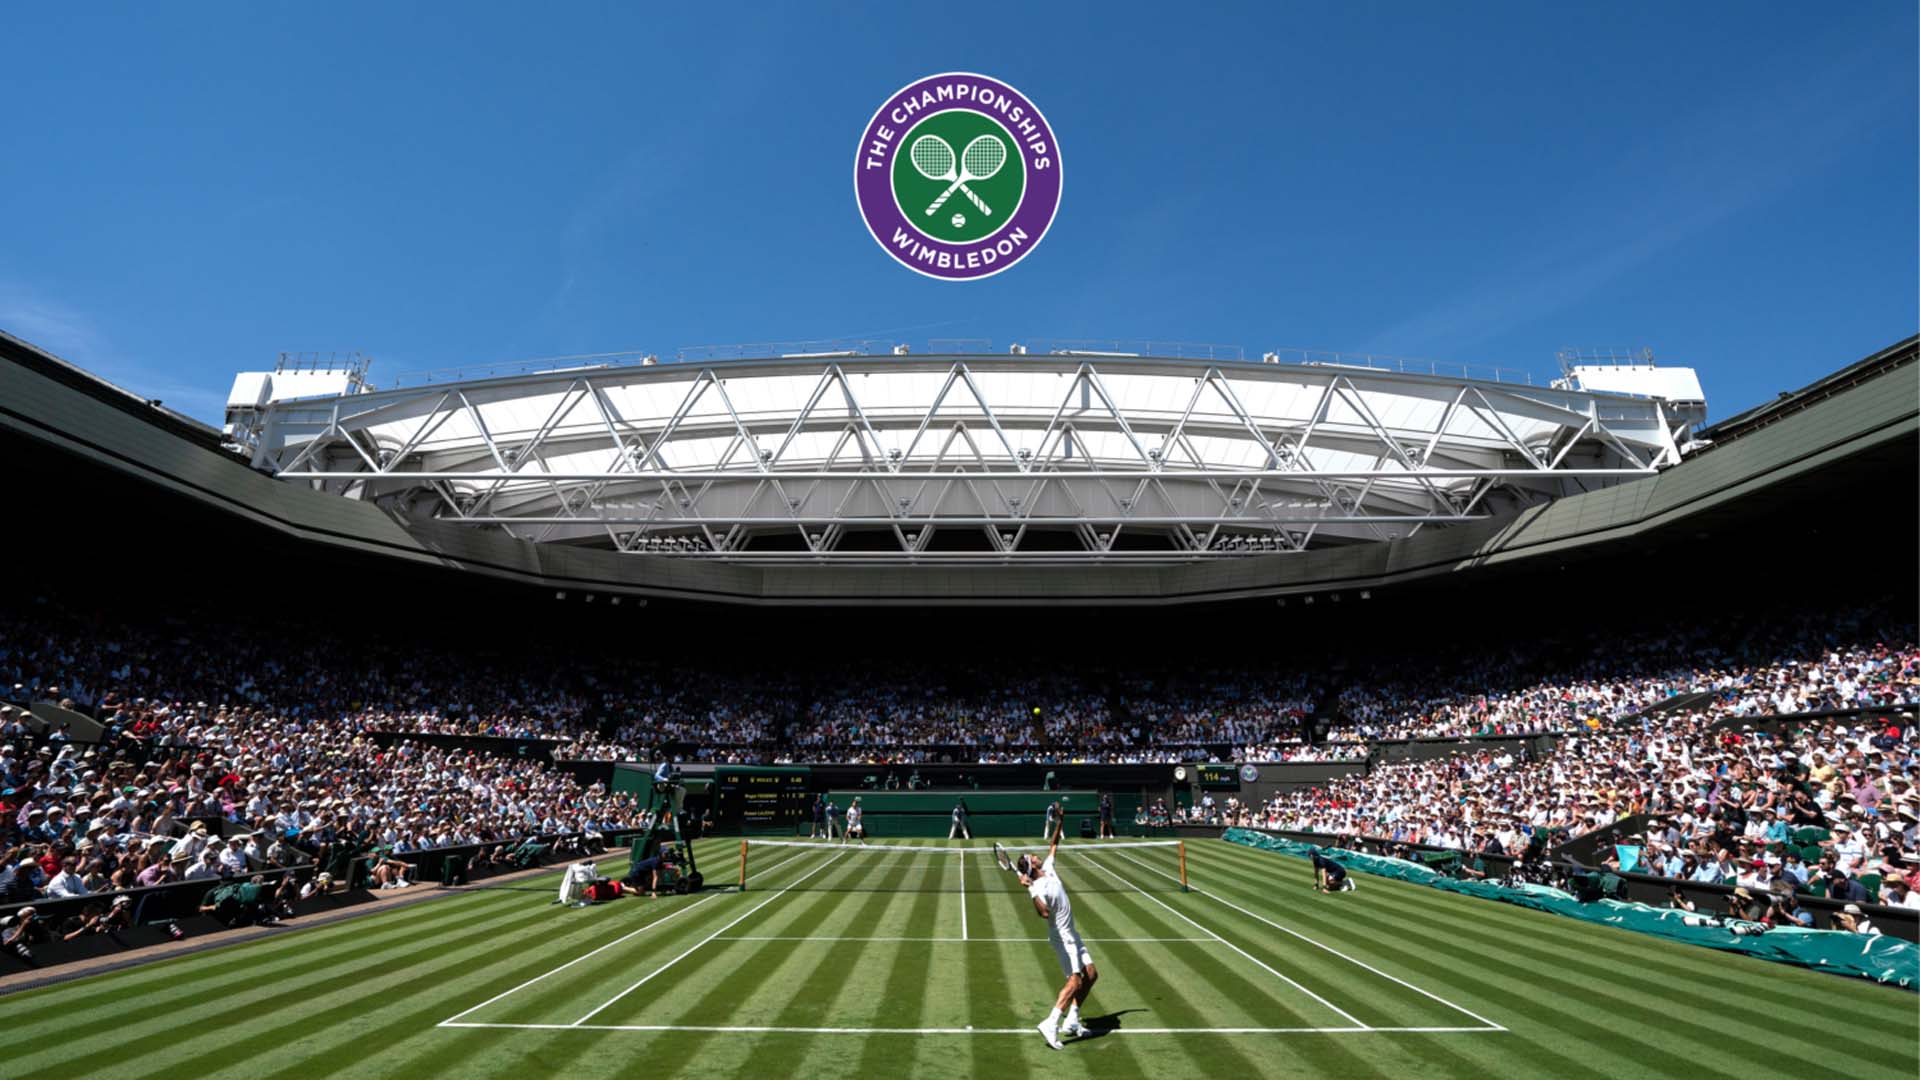 Wimbledon 2022 maçları hangi kanalda? Wimbledon maç programı 28 Haziran 2022 Salı 